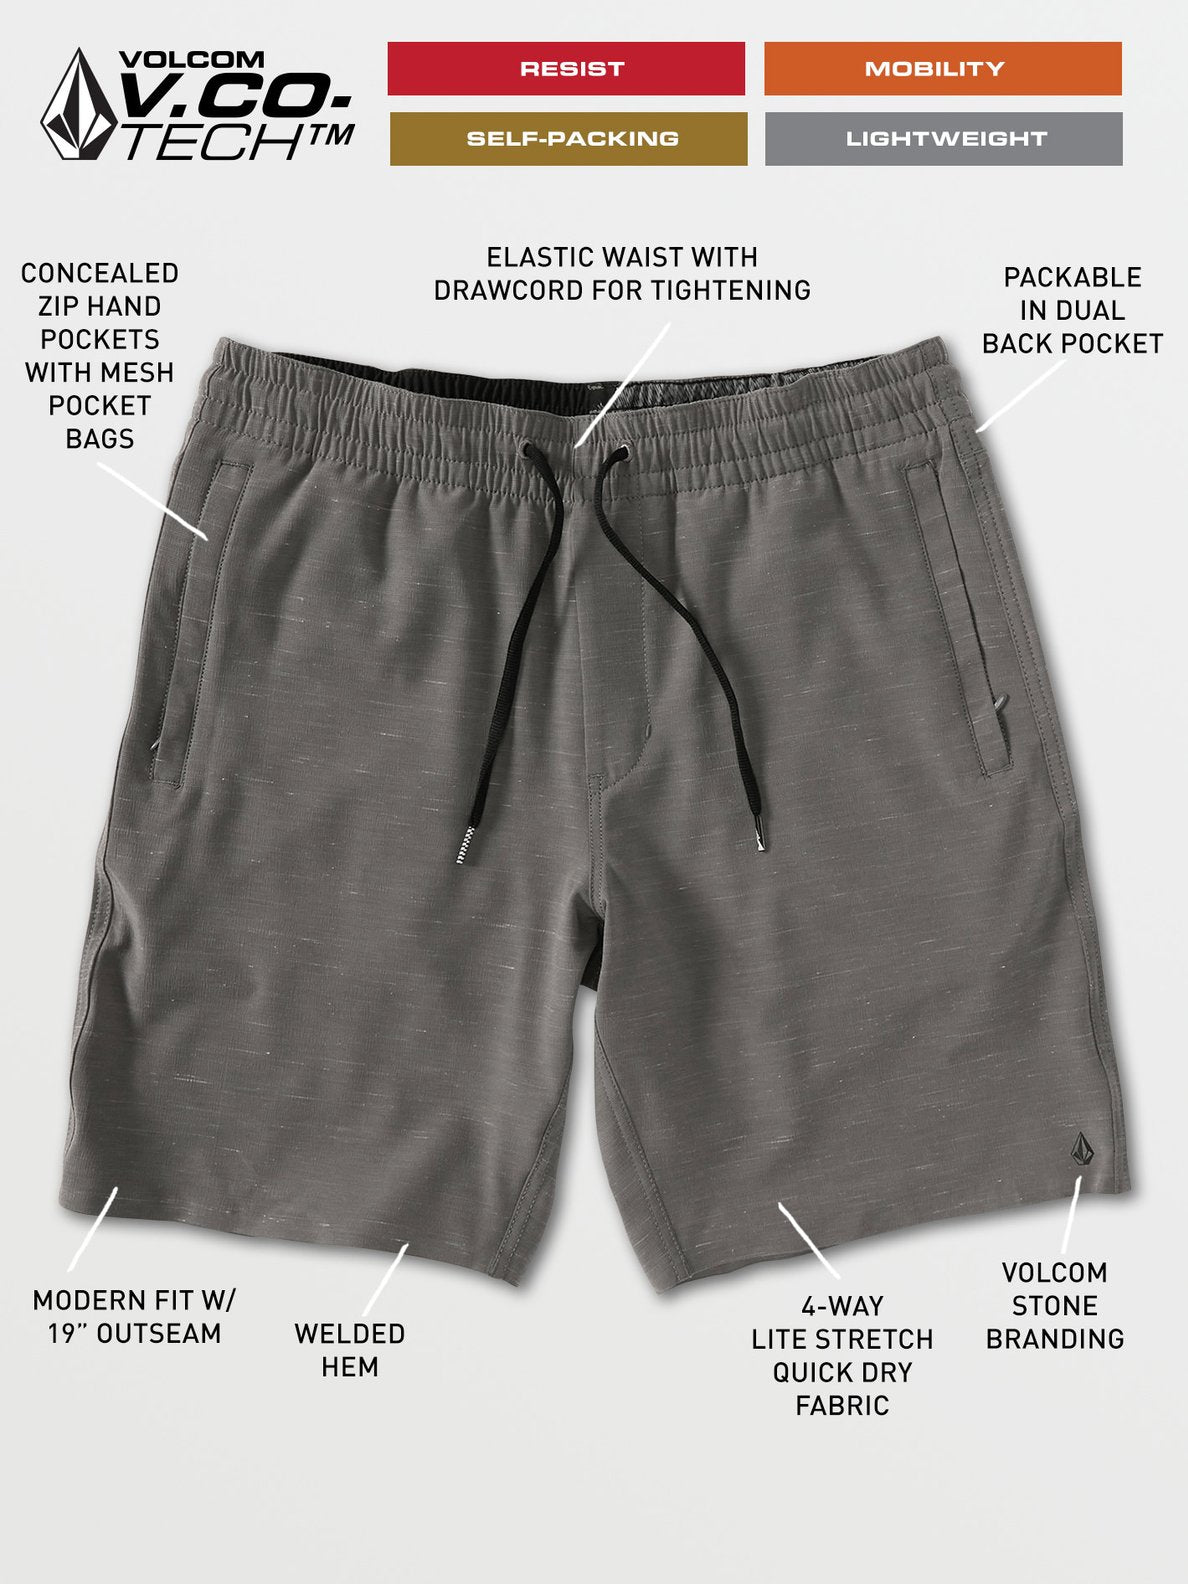 Volcom Packasack Lite 19 Hybrid Shorts Dark Charcoal Mens Shorts